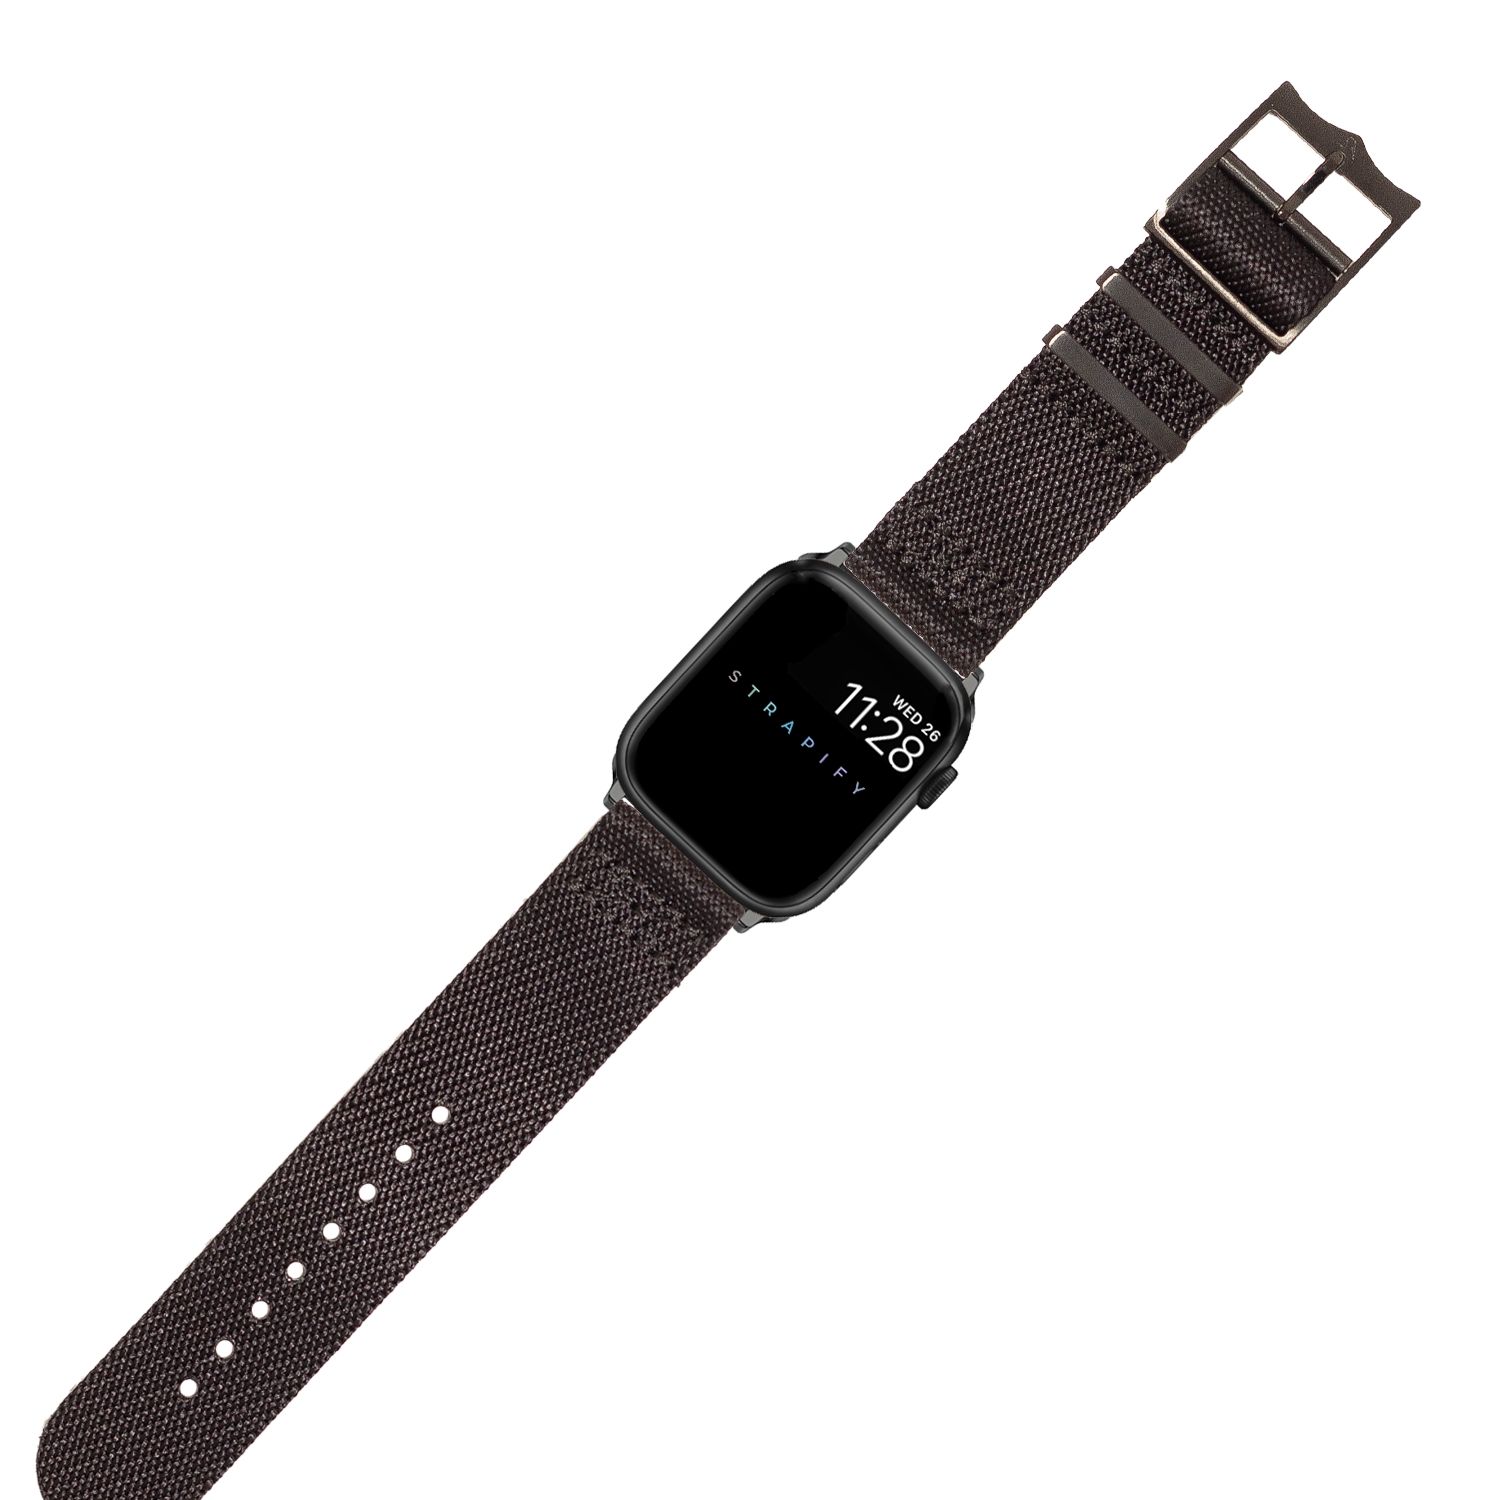 [Apple Watch] Cross Militex - Stealth Black [Black Hardware]